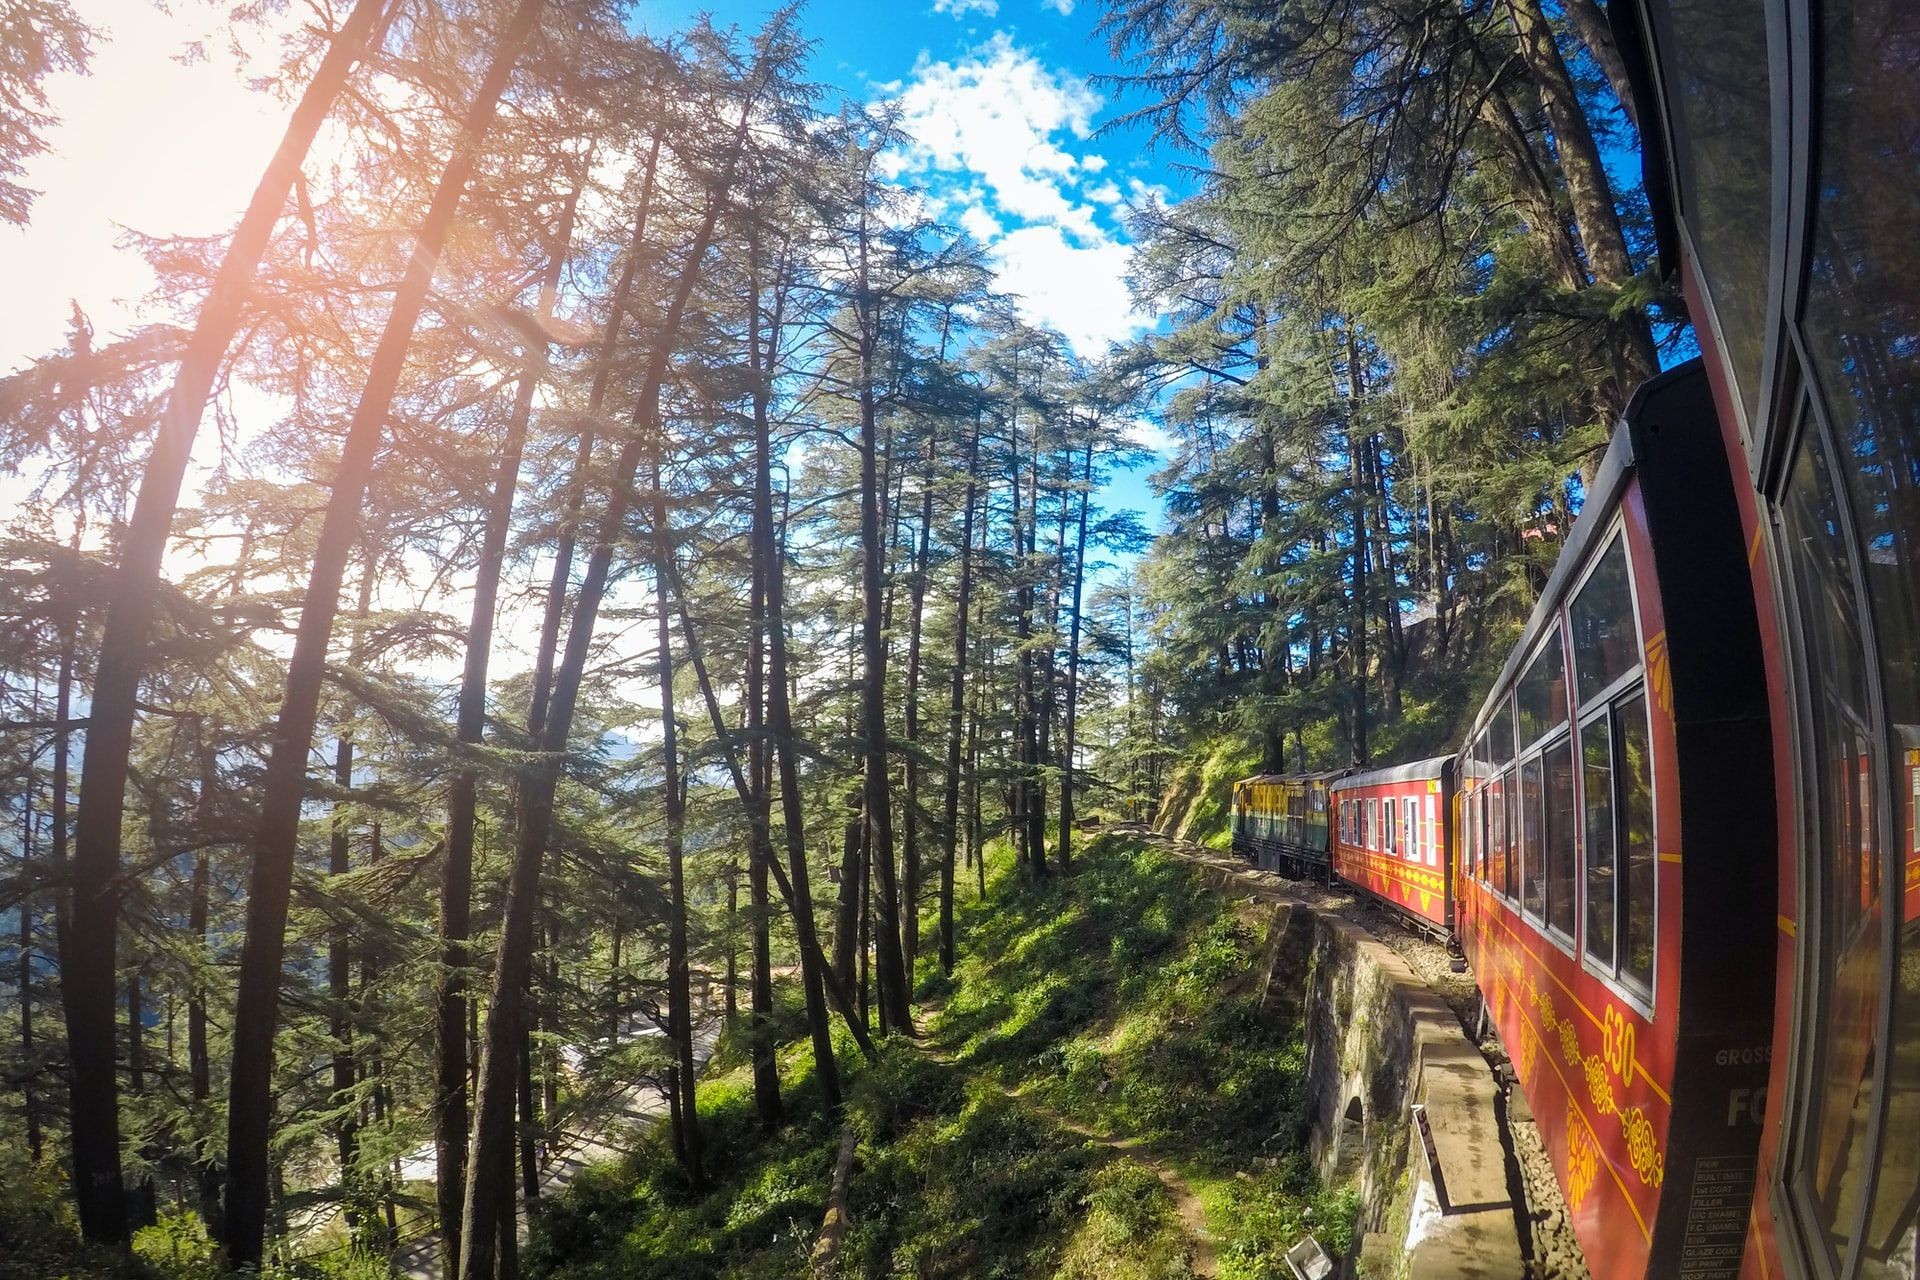  Shimla Tourism – A Perfect Shimla Travel Guide